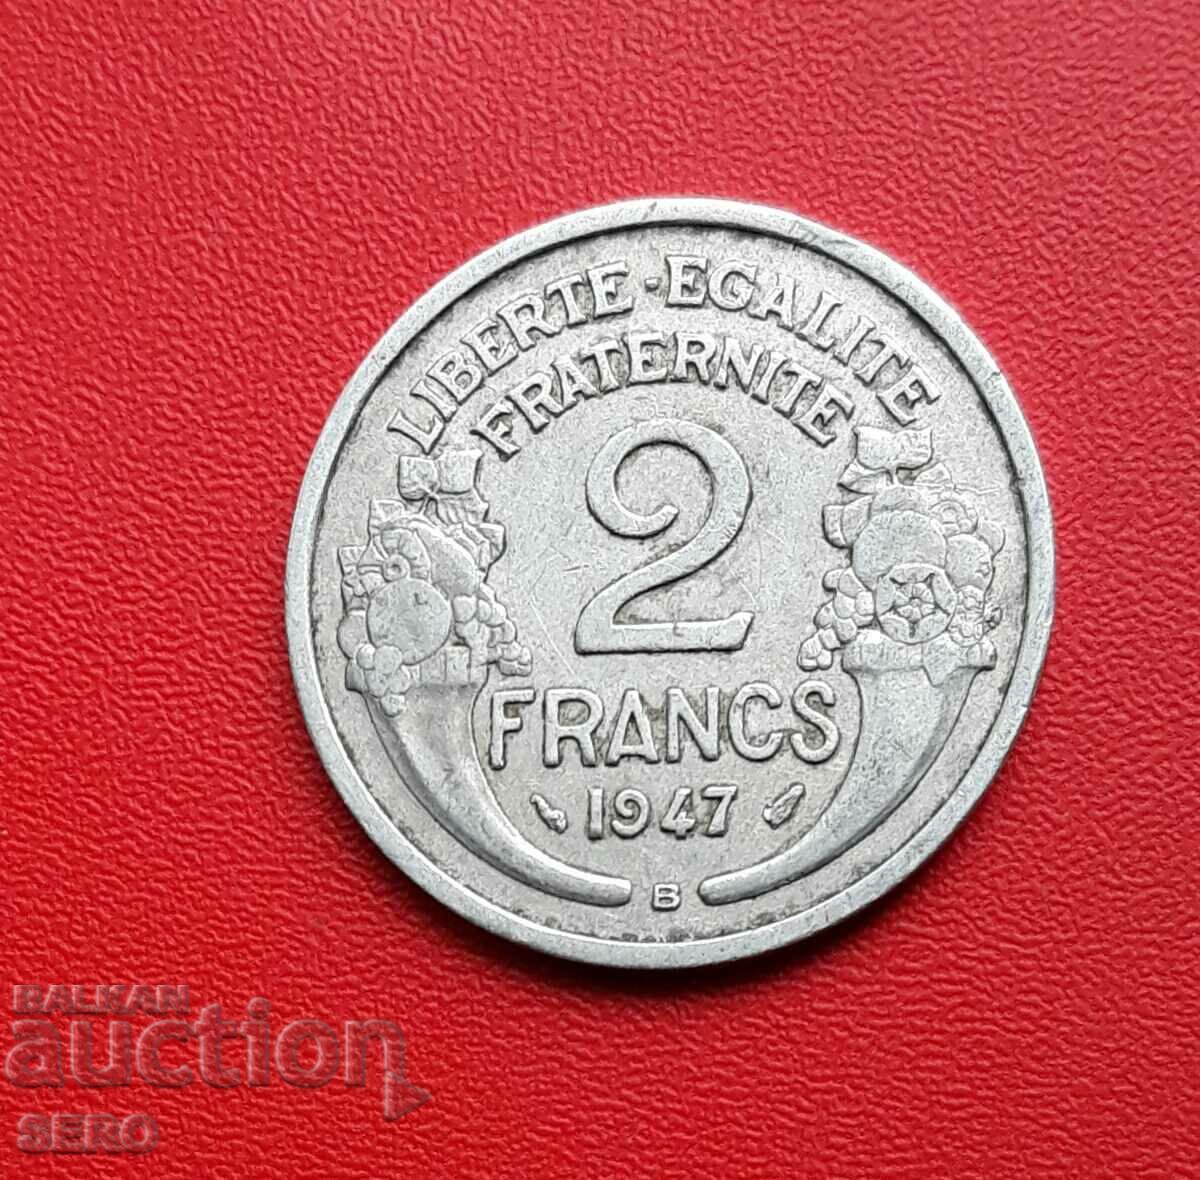 France-2 francs 1947 In-Beaumont le Roger